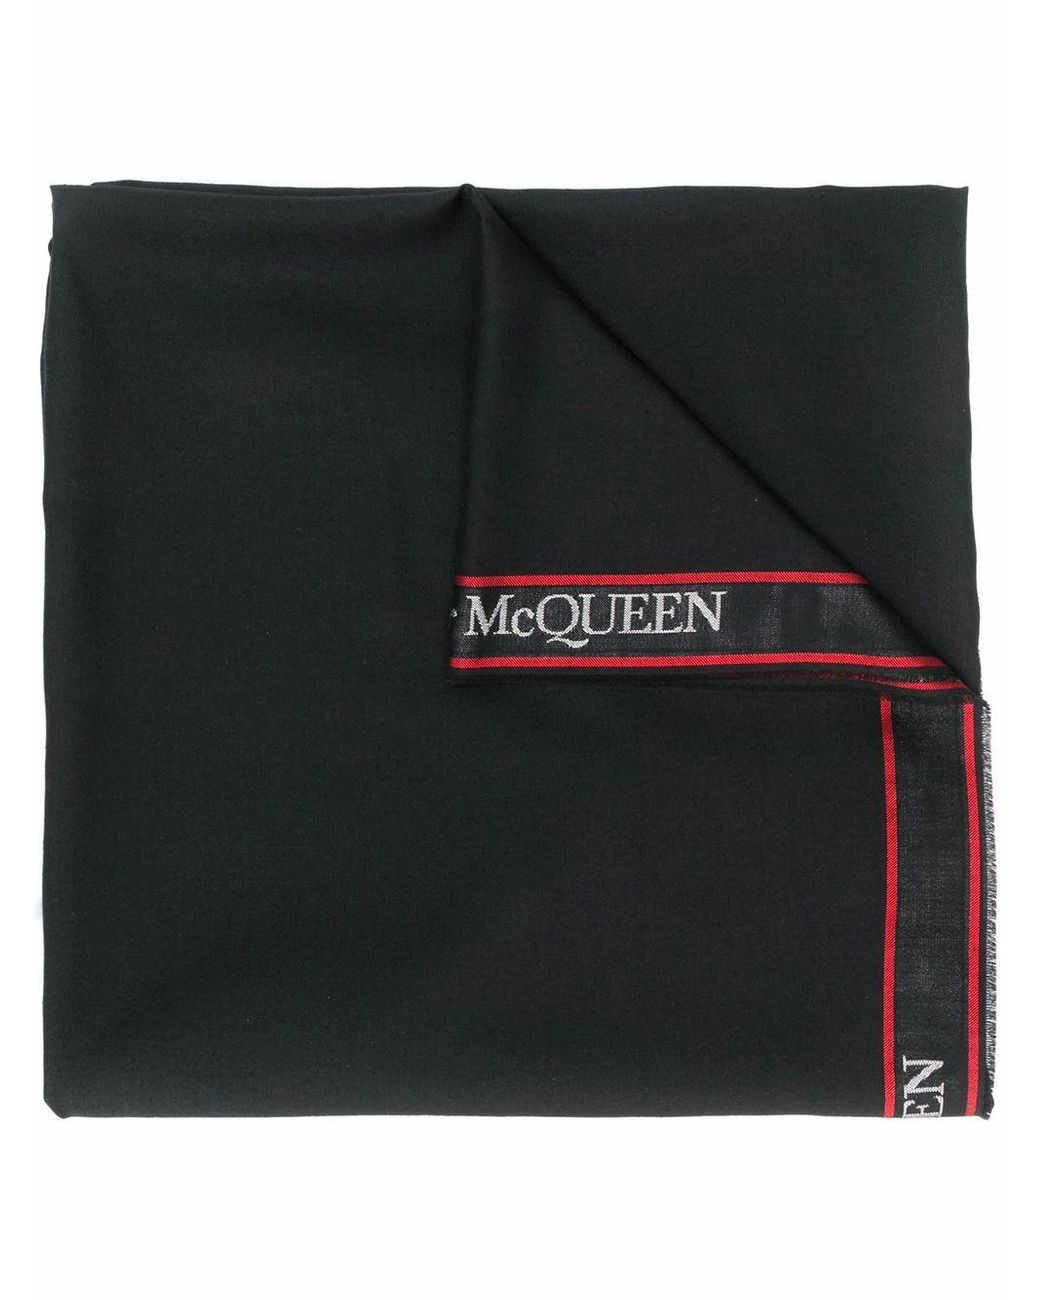 Alexander McQueen Wool Scarf in Black for Men - Lyst